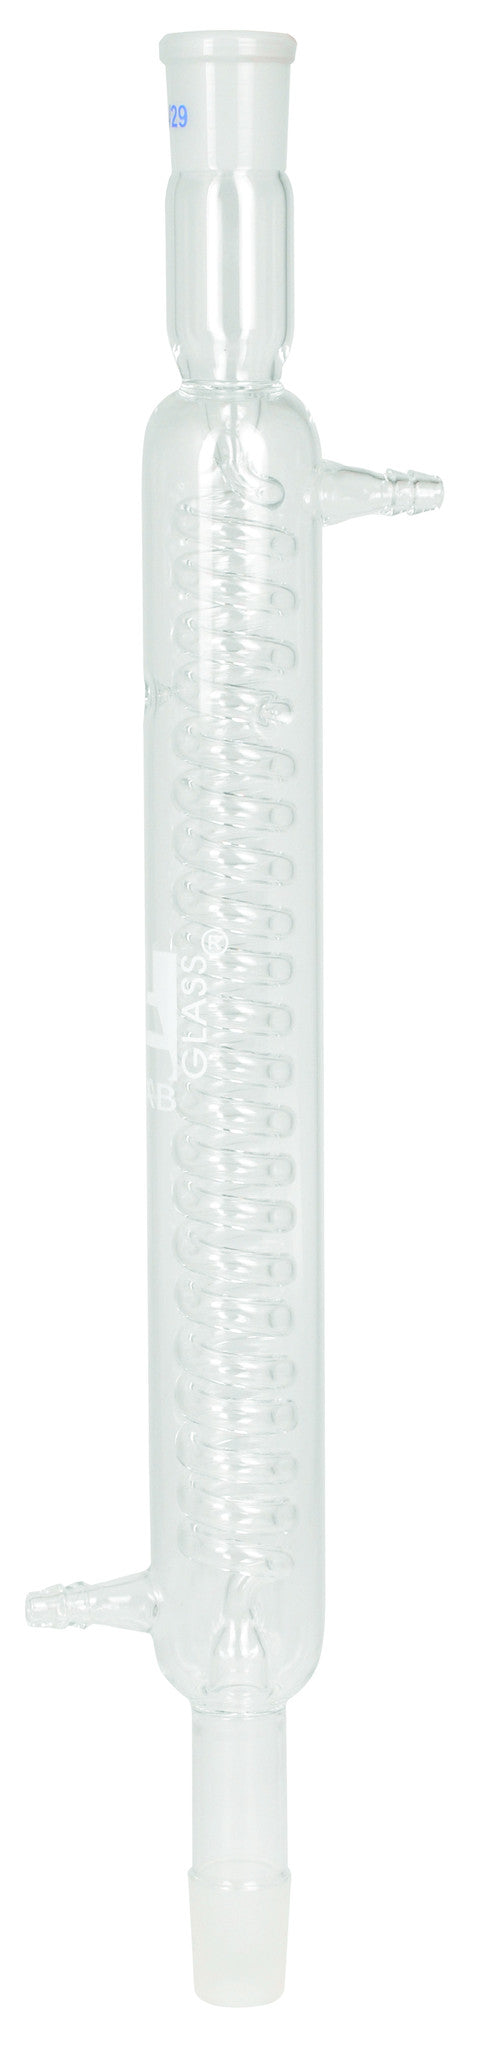 Condenser - Graham, Socket size 29/32 & Cone size 29/32, Effective length 30cm.